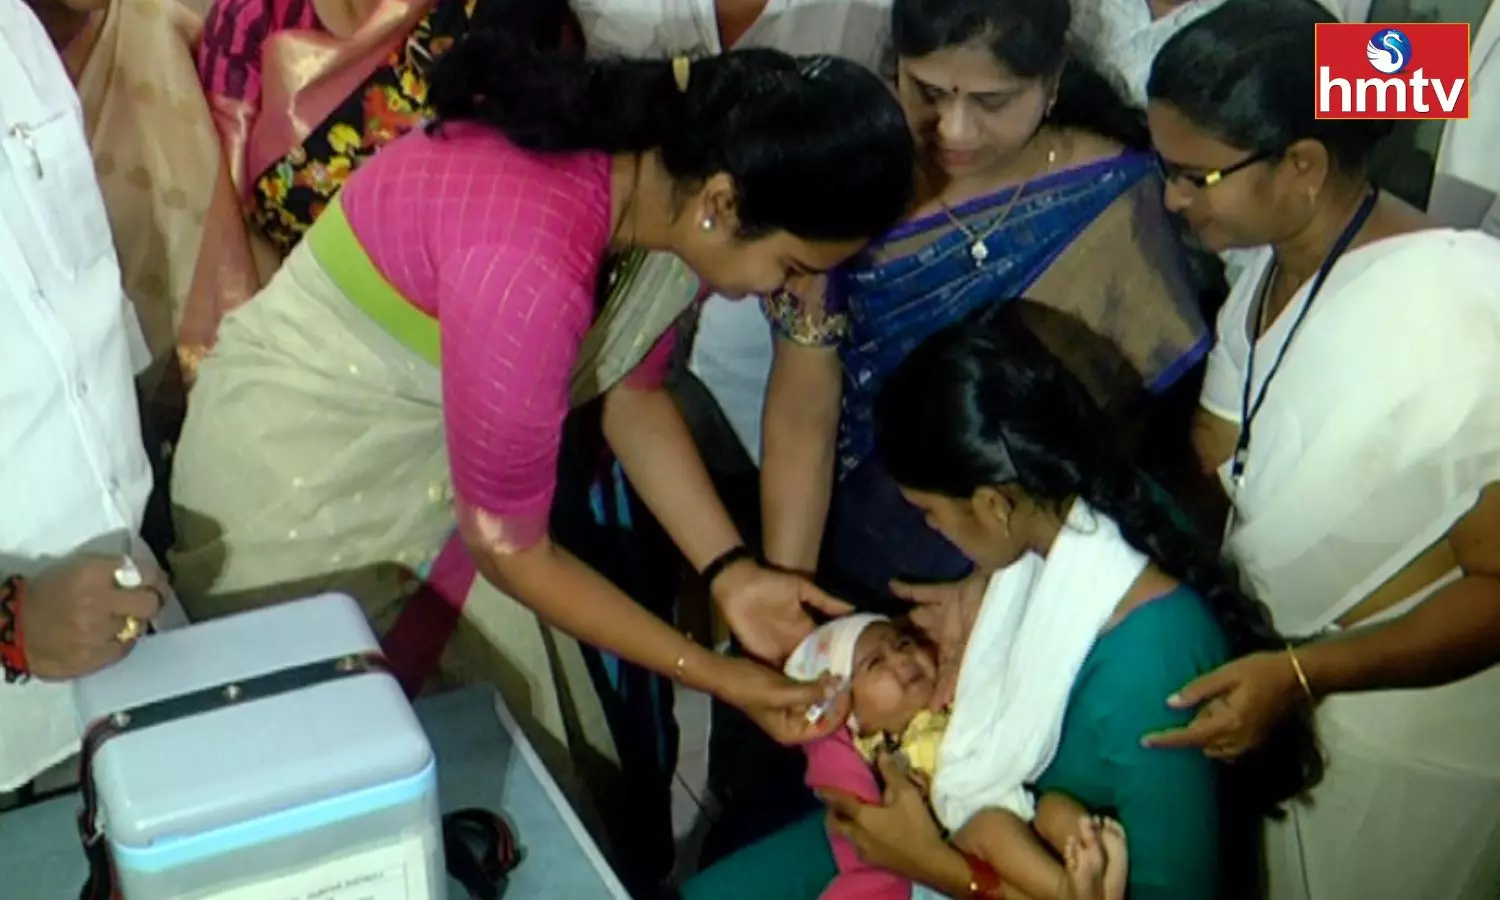 Minister Vidadala Rajini Administer Polio Drops To Children On Srinivasa Raopeta Guntur